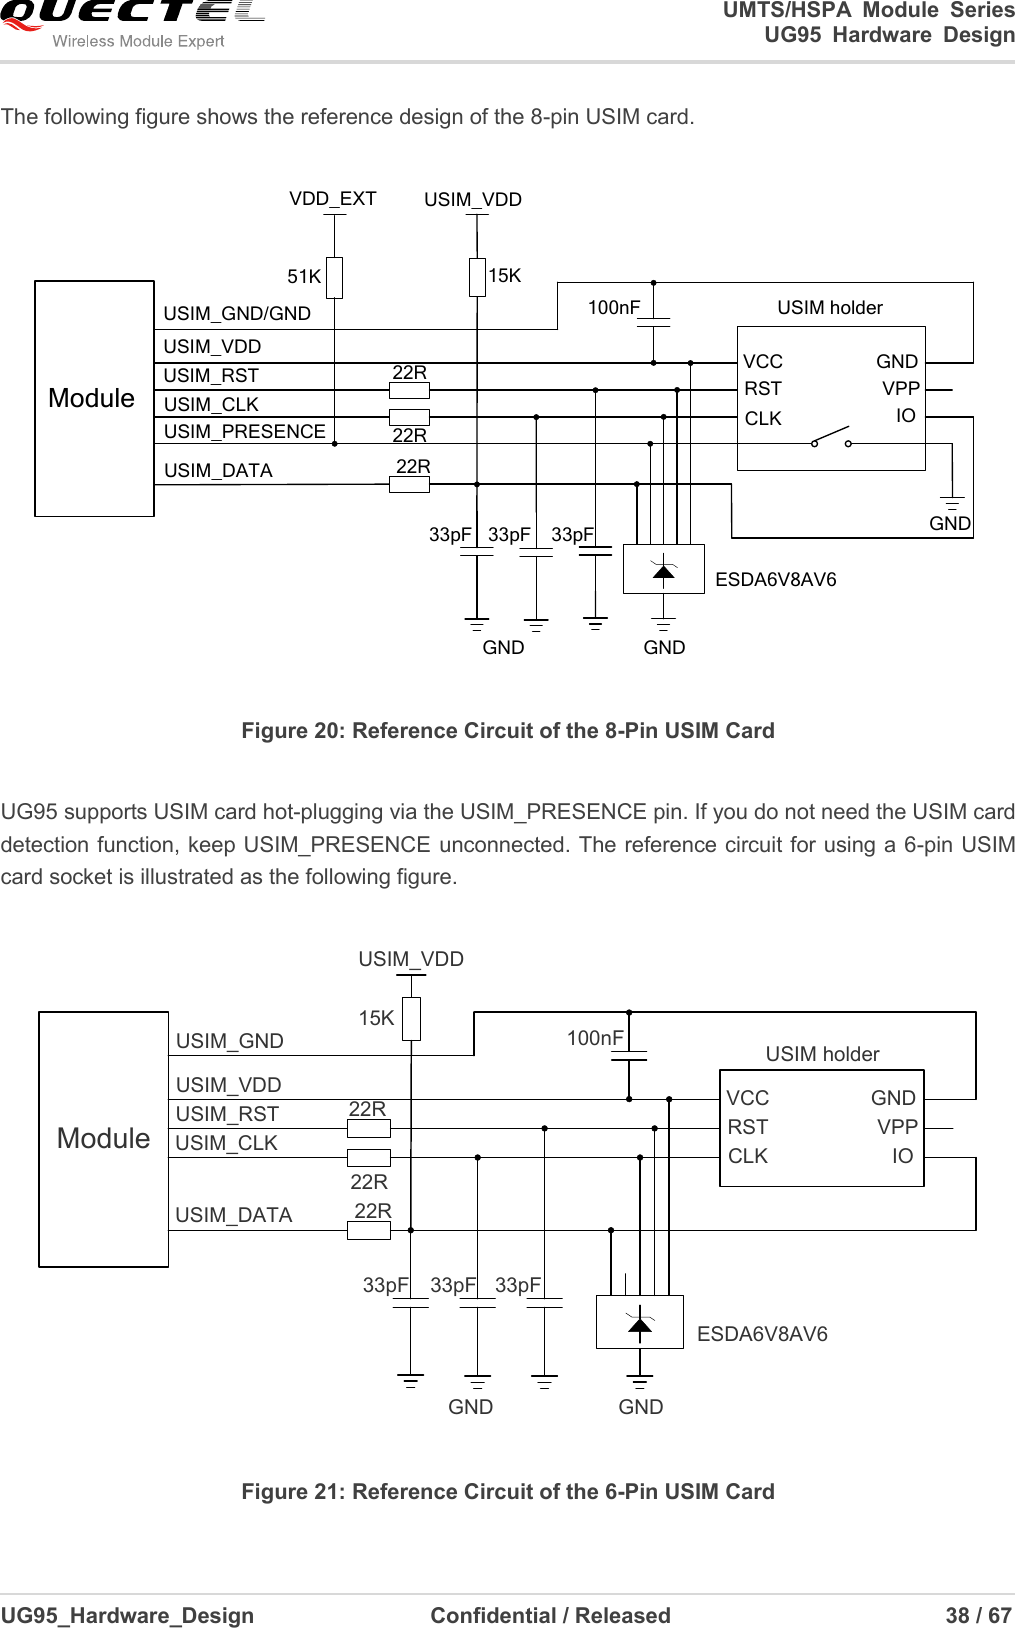                                                                                                                                               UMTS/HSPA  Module  Series                                                                 UG95  Hardware  Design  UG95_Hardware_Design                  Confidential / Released                             38 / 67    The following figure shows the reference design of the 8-pin USIM card.  USIM_VDDUSIM_GND/GNDUSIM_RSTUSIM_CLKUSIM_DATAUSIM_PRESENCE22R22R22RVDD_EXT51K100nF USIM holderGNDGNDESDA6V8AV633pF 33pF 33pFVCCRSTCLK IOVPPGNDGNDUSIM_VDD15KModule Figure 20: Reference Circuit of the 8-Pin USIM Card  UG95 supports USIM card hot-plugging via the USIM_PRESENCE pin. If you do not need the USIM card detection function, keep USIM_PRESENCE unconnected. The reference circuit for using a 6-pin USIM card socket is illustrated as the following figure.  ModuleUSIM_VDDUSIM_GNDUSIM_RSTUSIM_CLKUSIM_DATA 22R22R22R100nF USIM holderGNDESDA6V8AV633pF 33pF 33pFVCCRSTCLK IOVPPGNDGND15KUSIM_VDD Figure 21: Reference Circuit of the 6-Pin USIM Card  